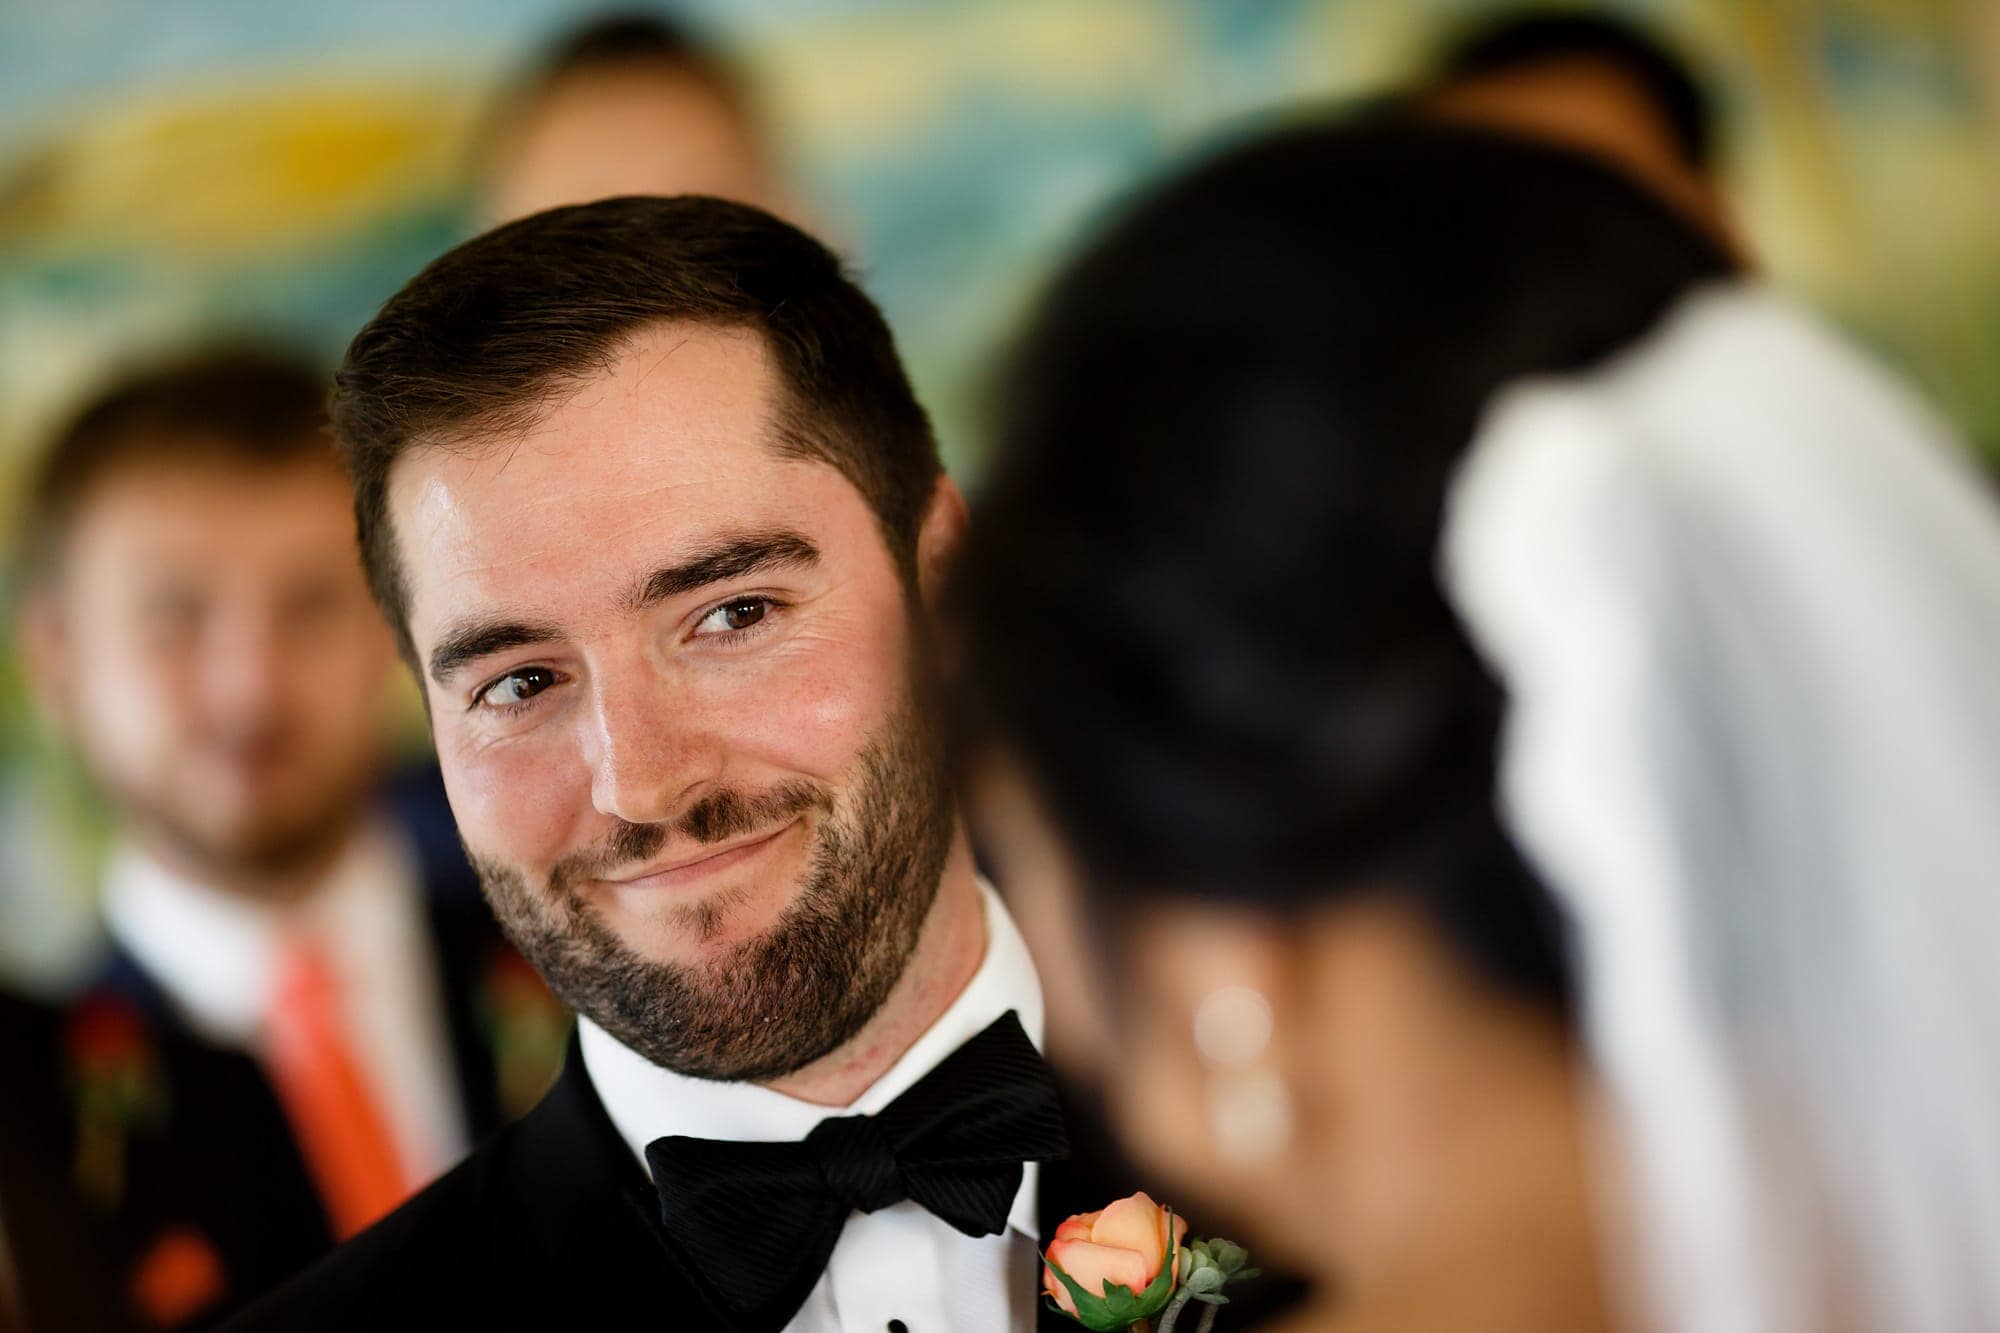 Bryan smiles at his bride during their wedding